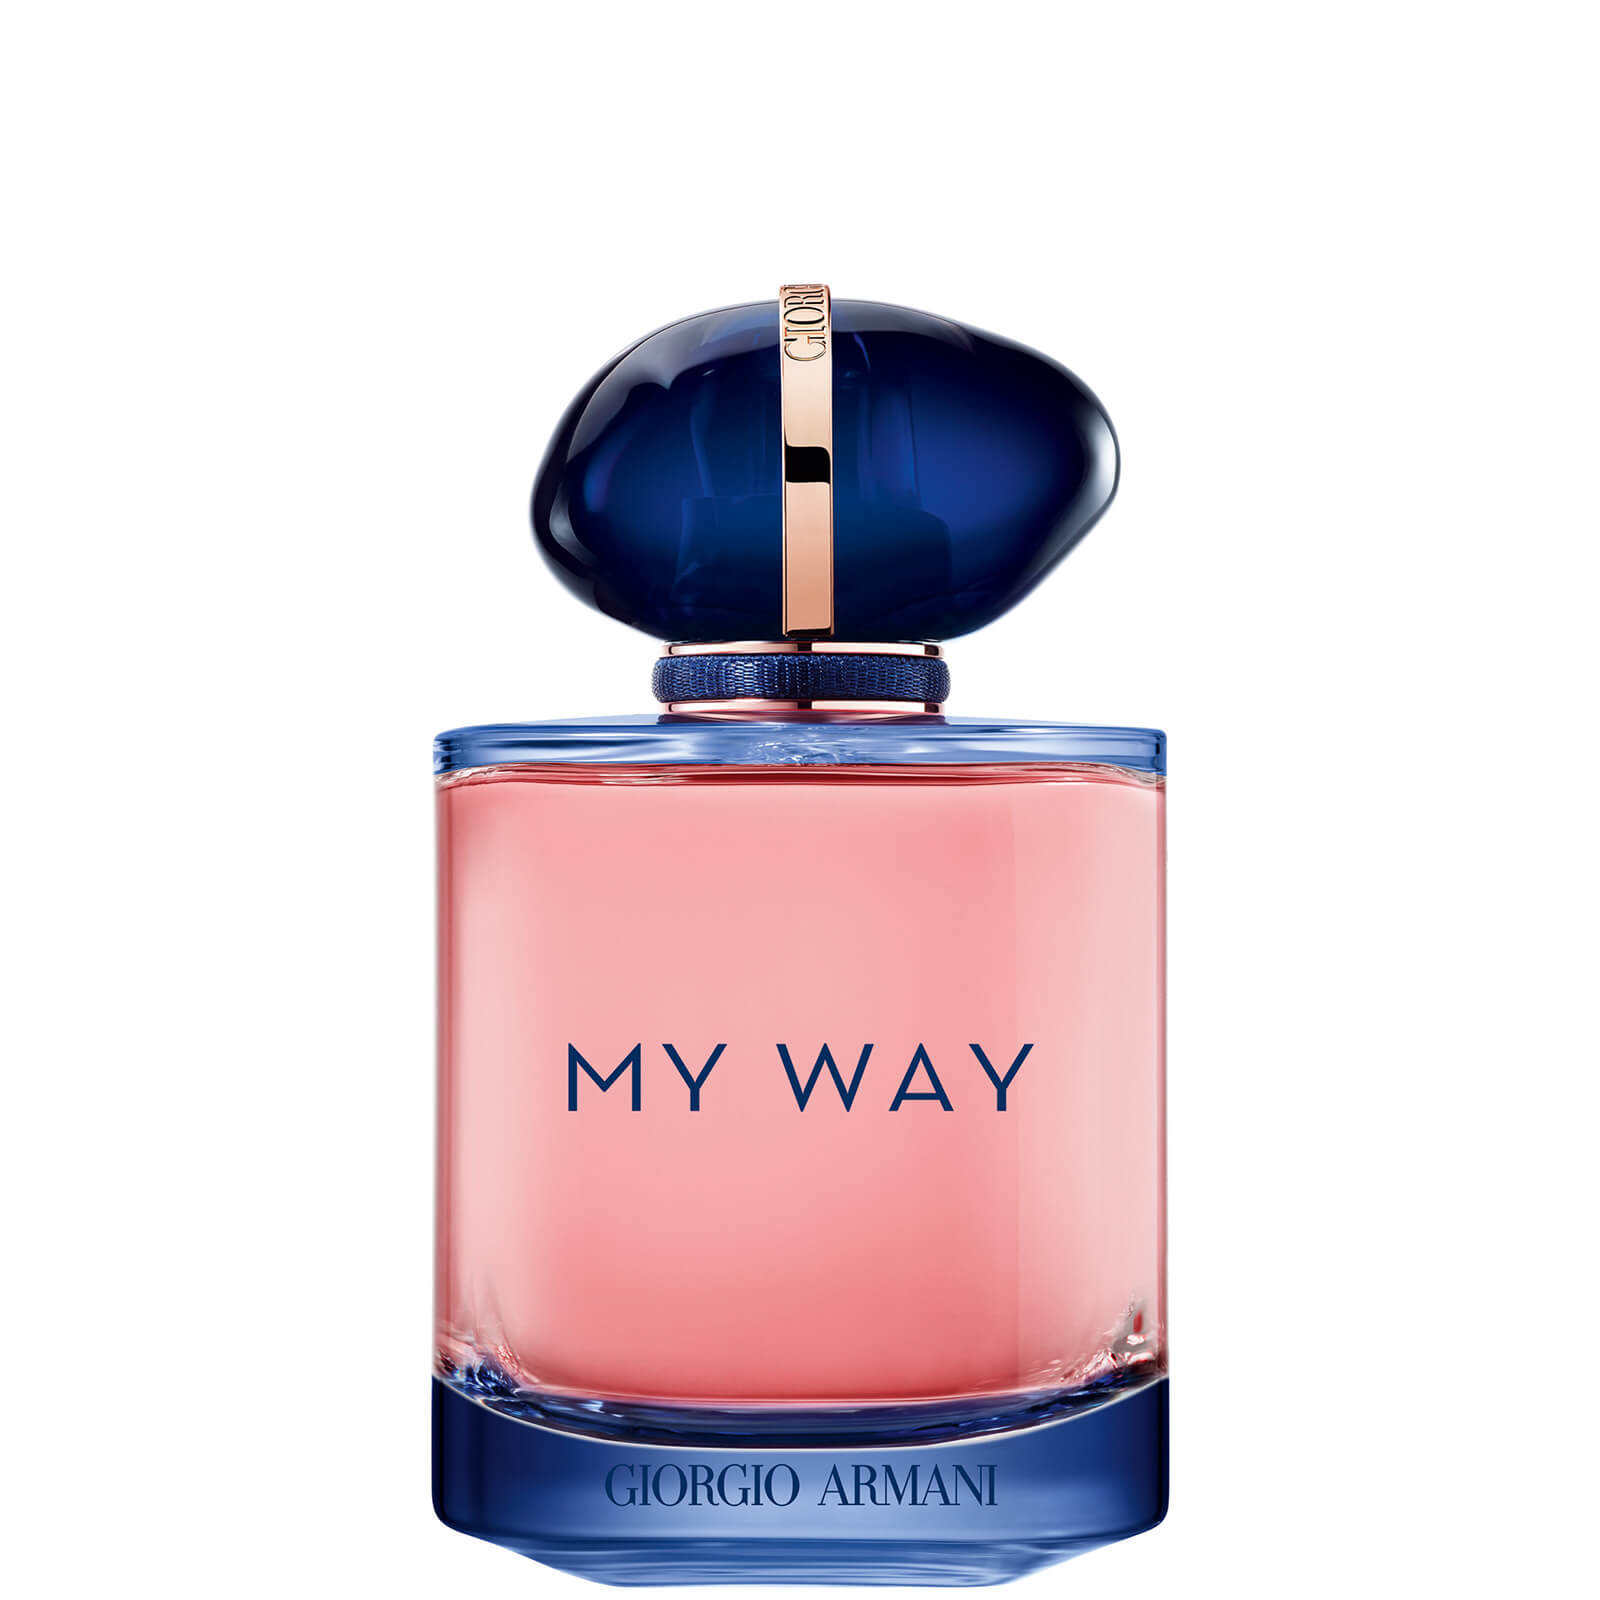 Image of Armani My Way Eau de Parfum Intense - 90ml